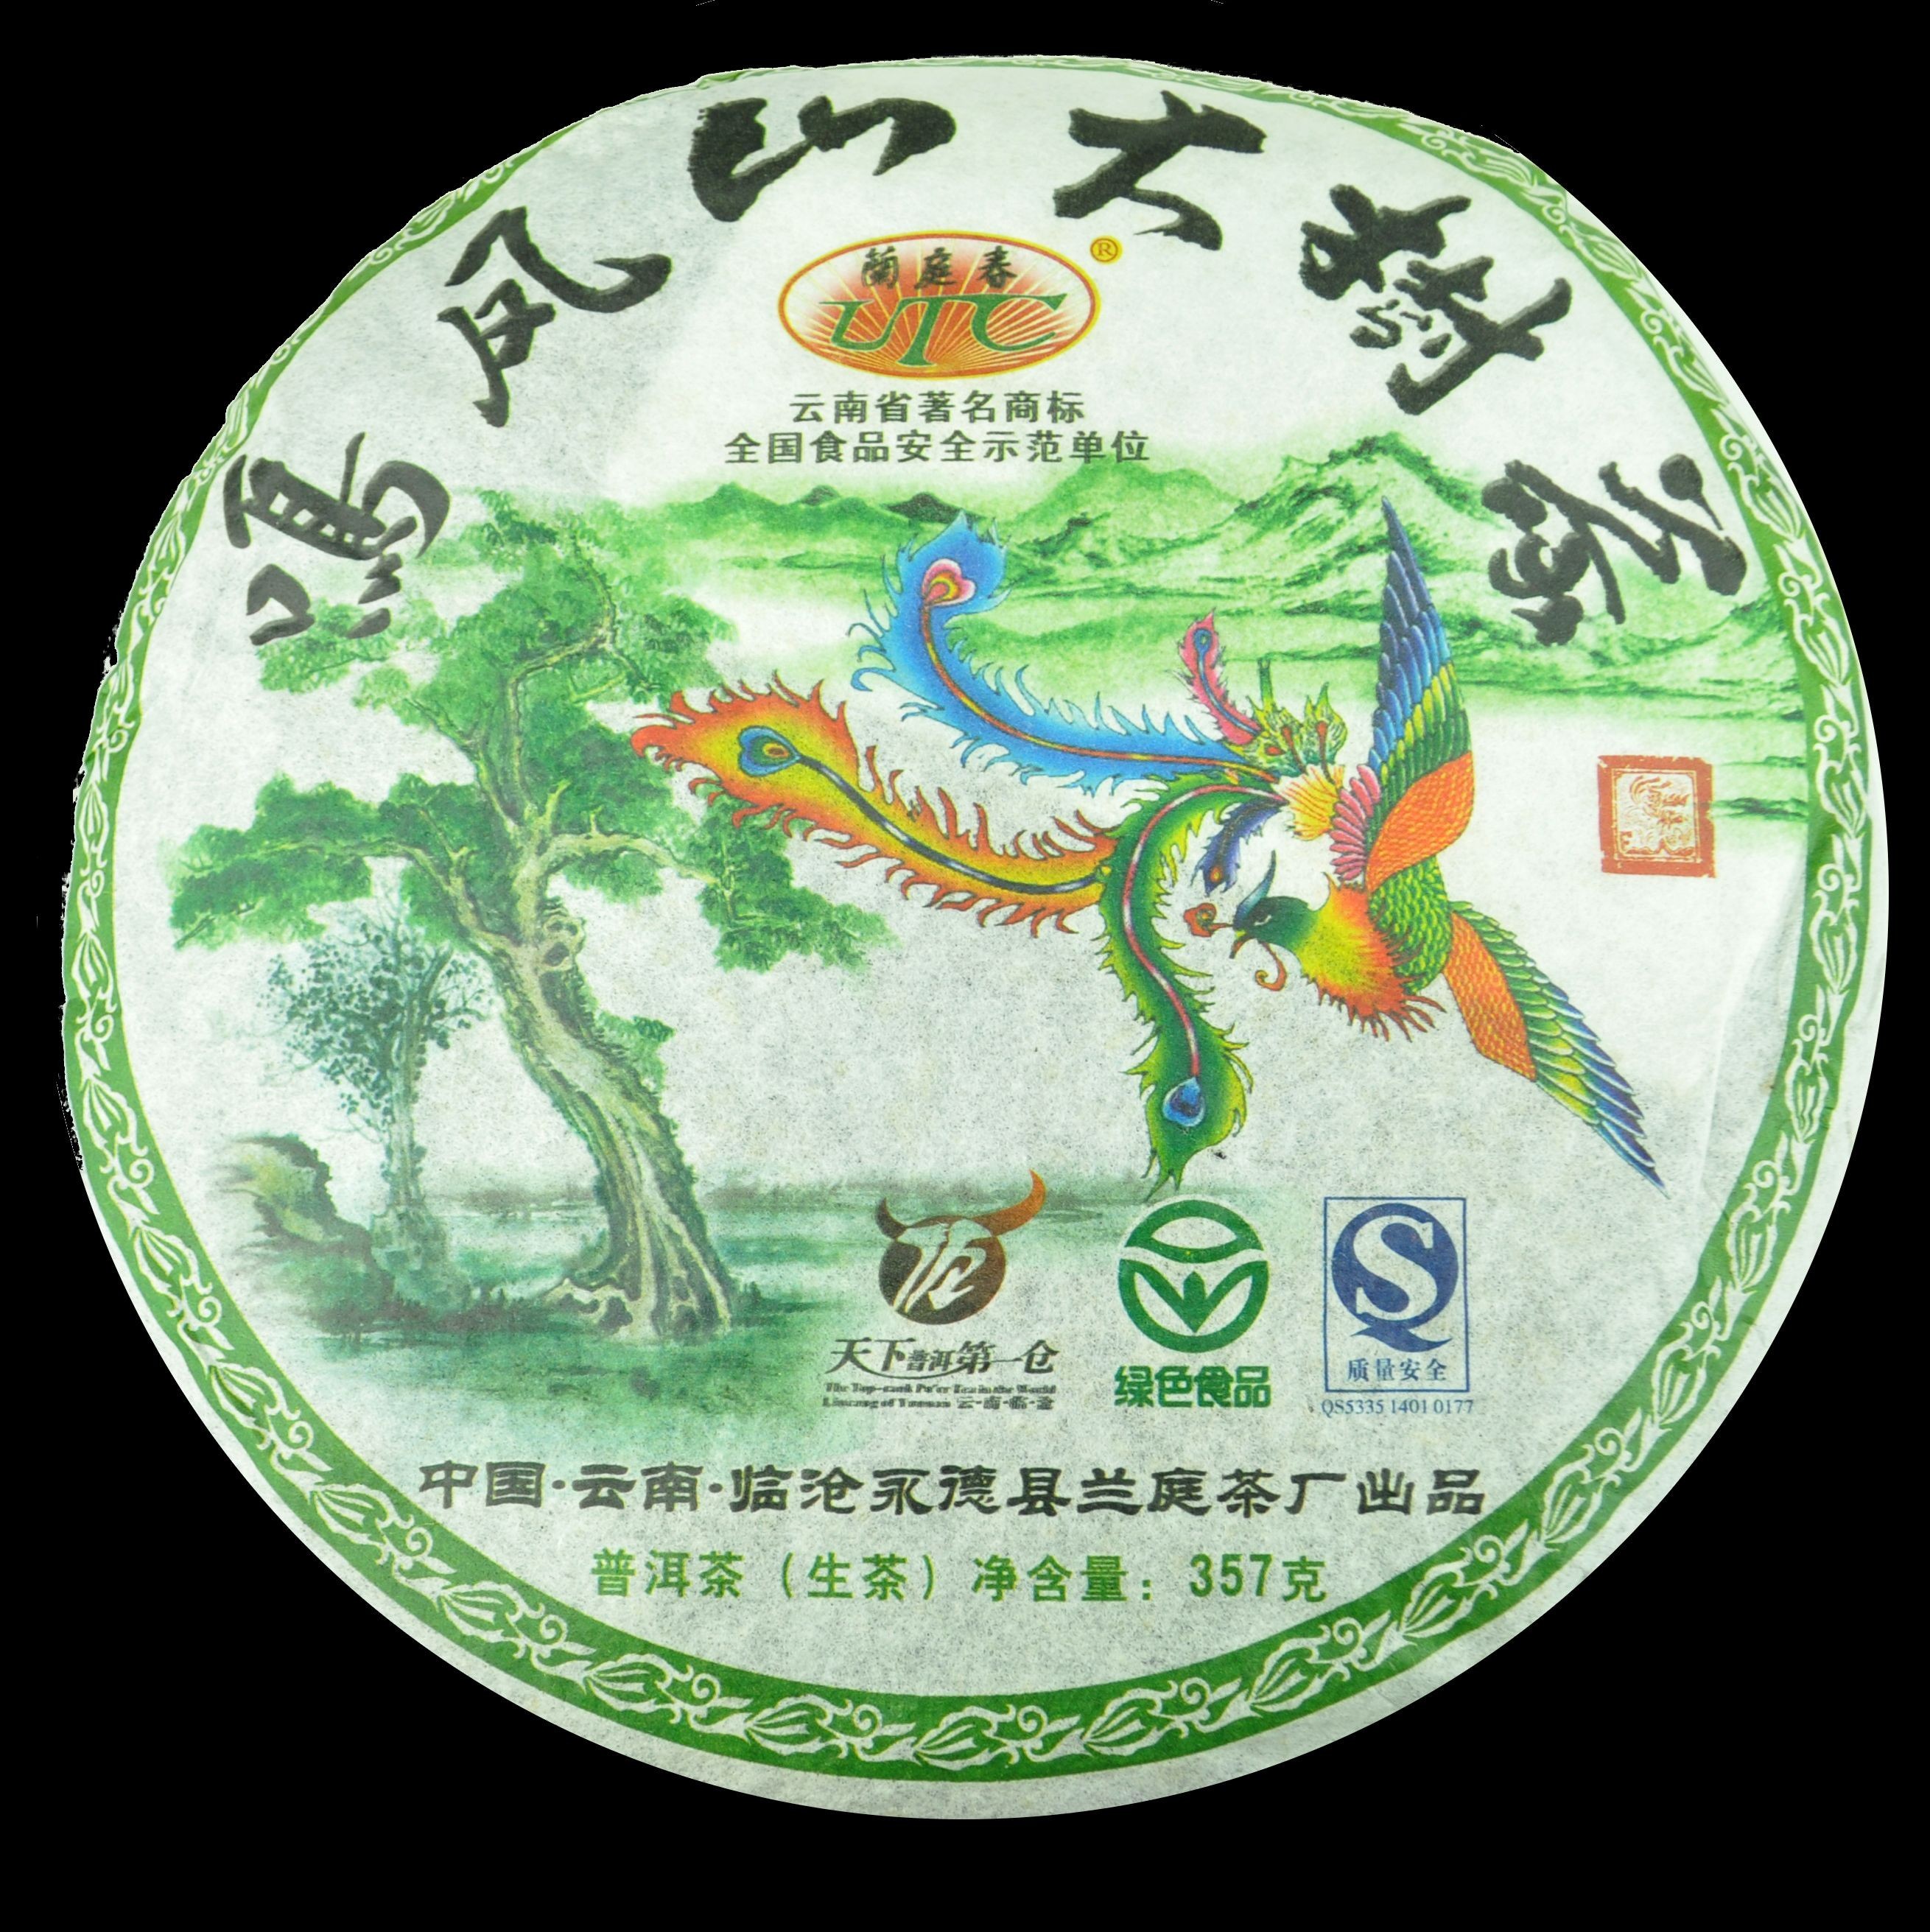 2009 Lan Ting Chun "Min Feng Mountain" Raw Pu-erh Tea cake